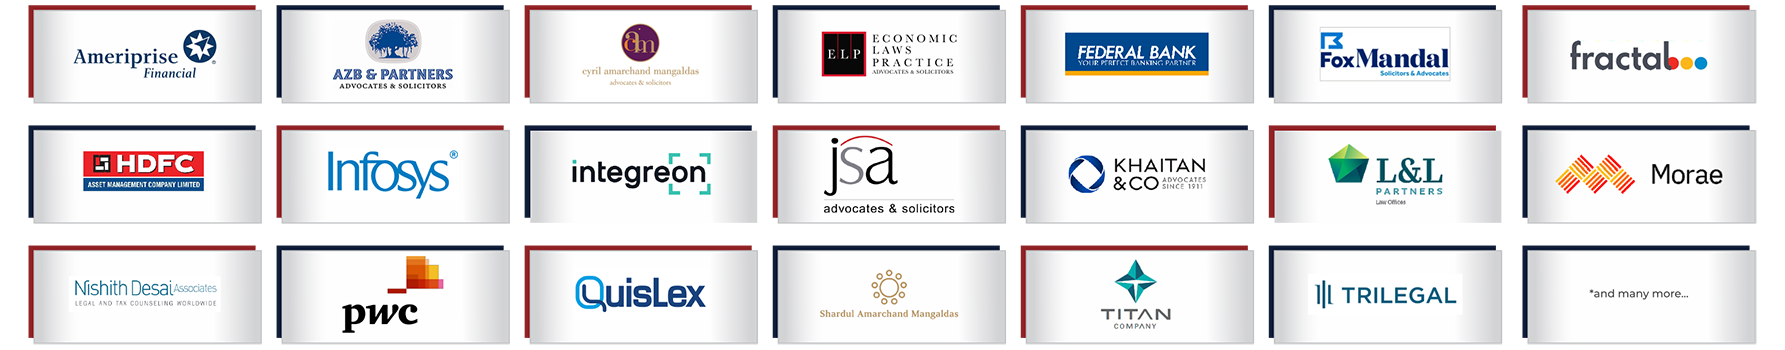 Alliance School of Law - Companies Logos